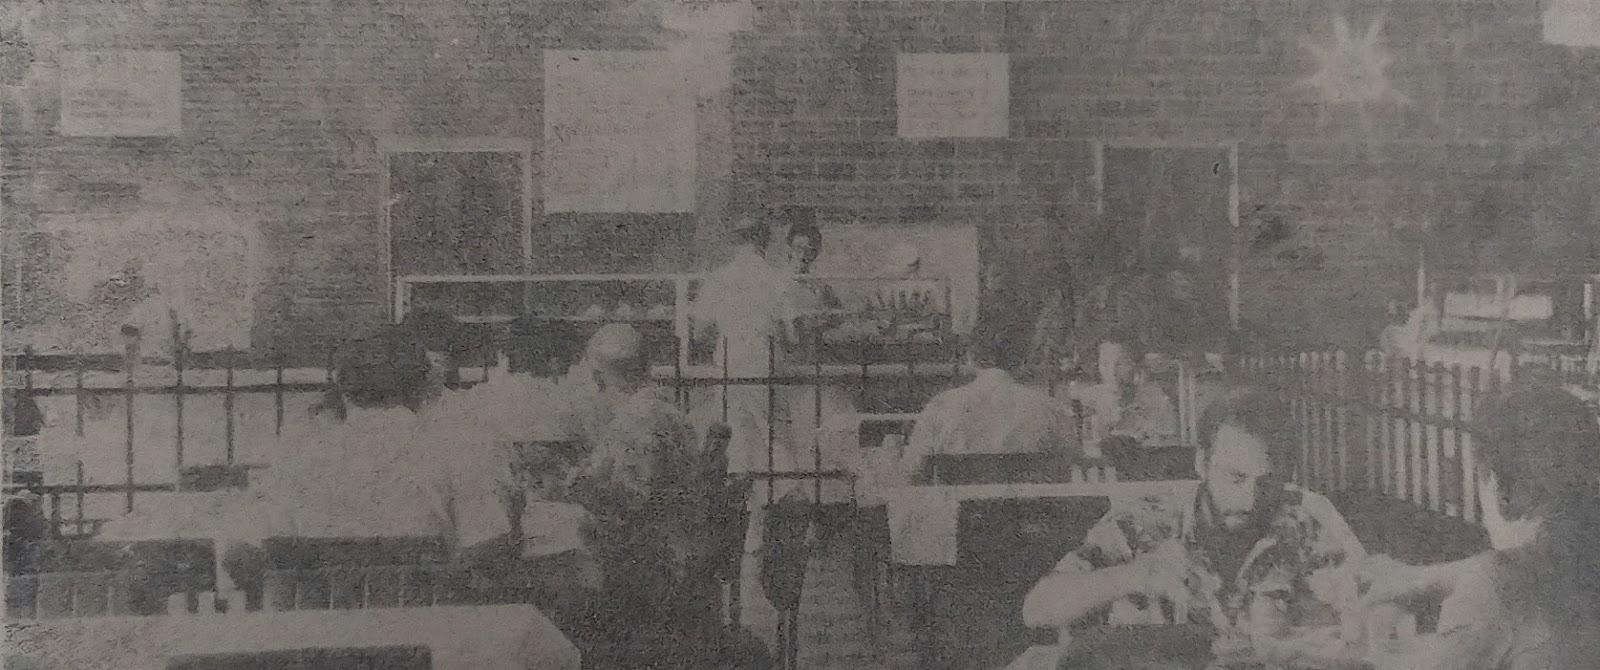 Restaurante do Musamar - 1978